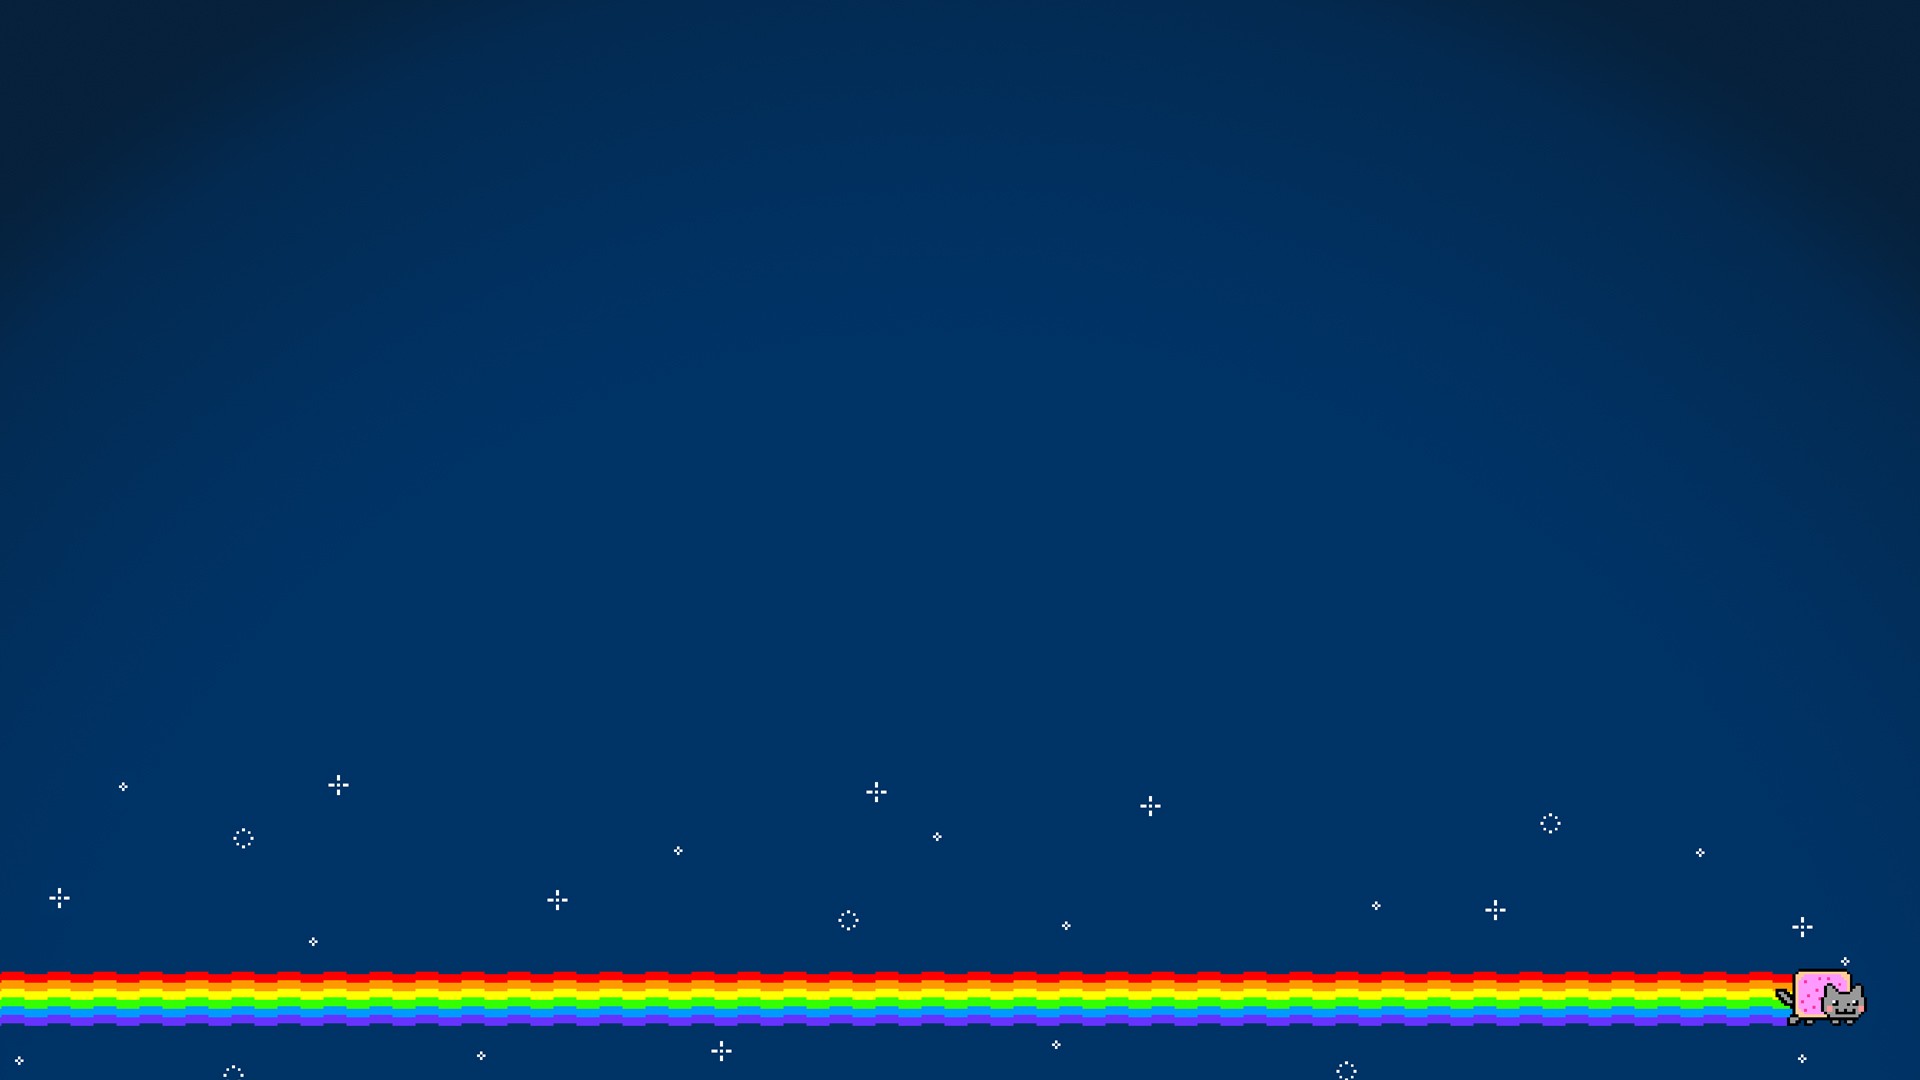 General 1920x1080 Nyan Cat simple background rainbows cats blue background digital art minimalism